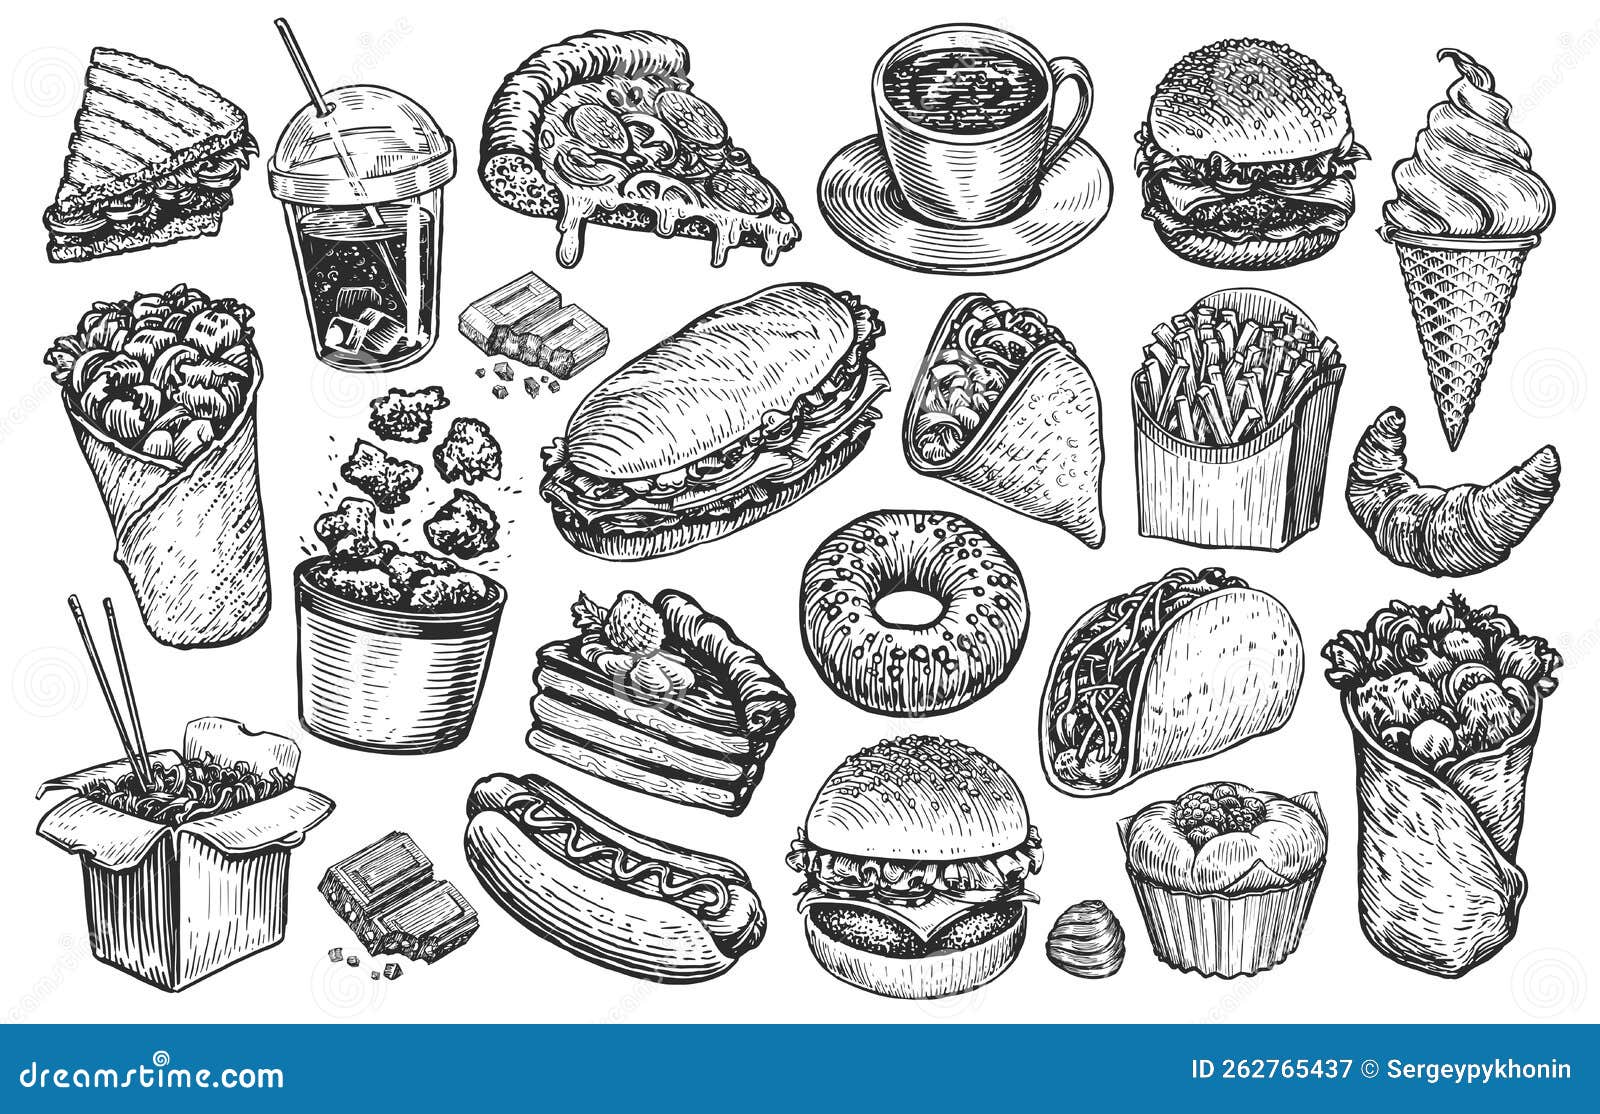 Fast Food Sketch Vector Art PNG Images  Free Download On Pngtree